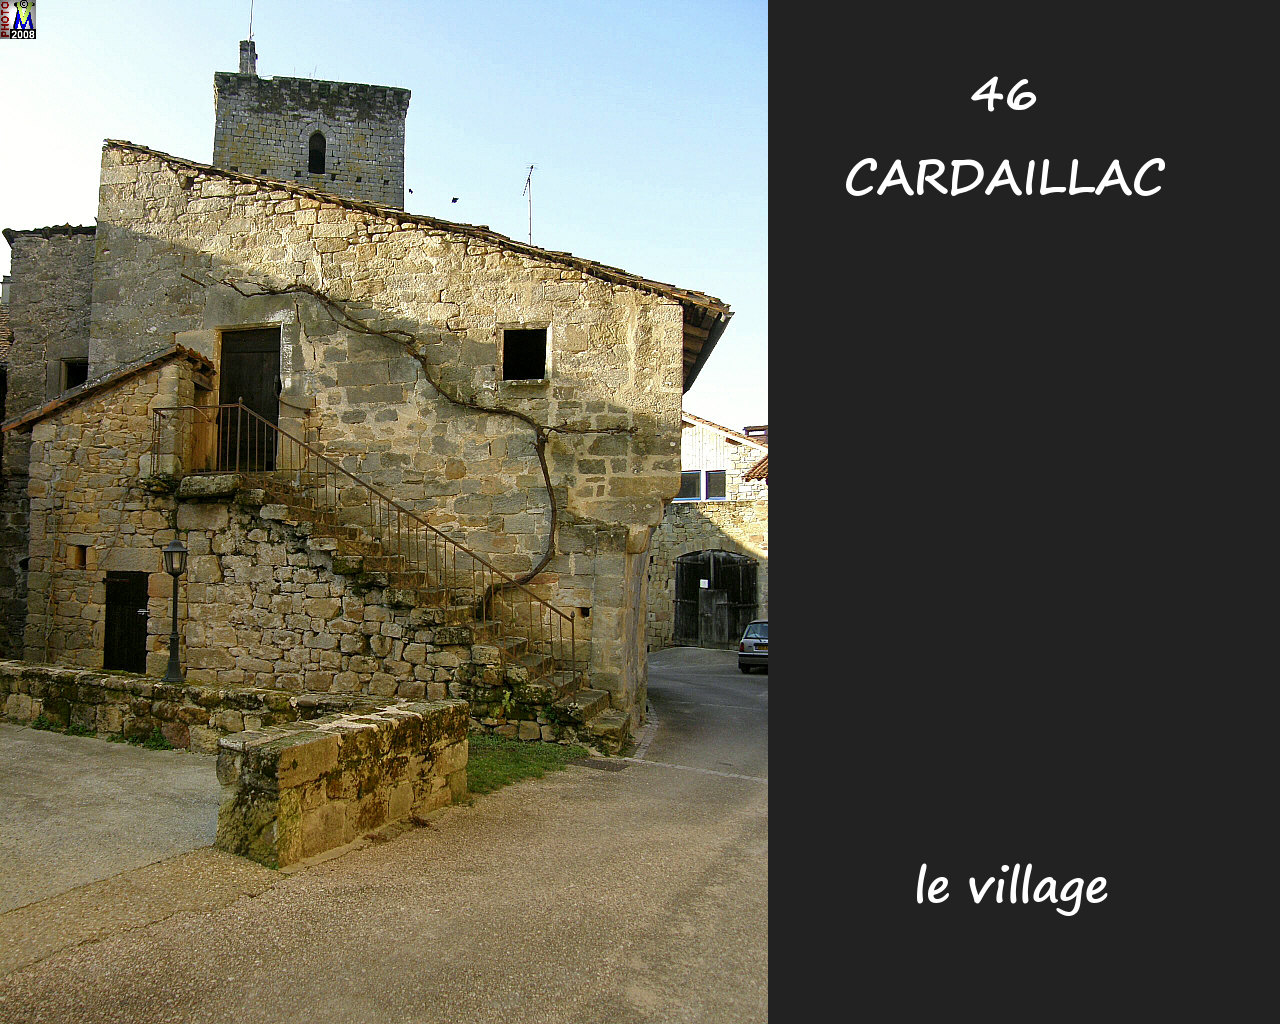 46CARDAILLAC_village_104.jpg